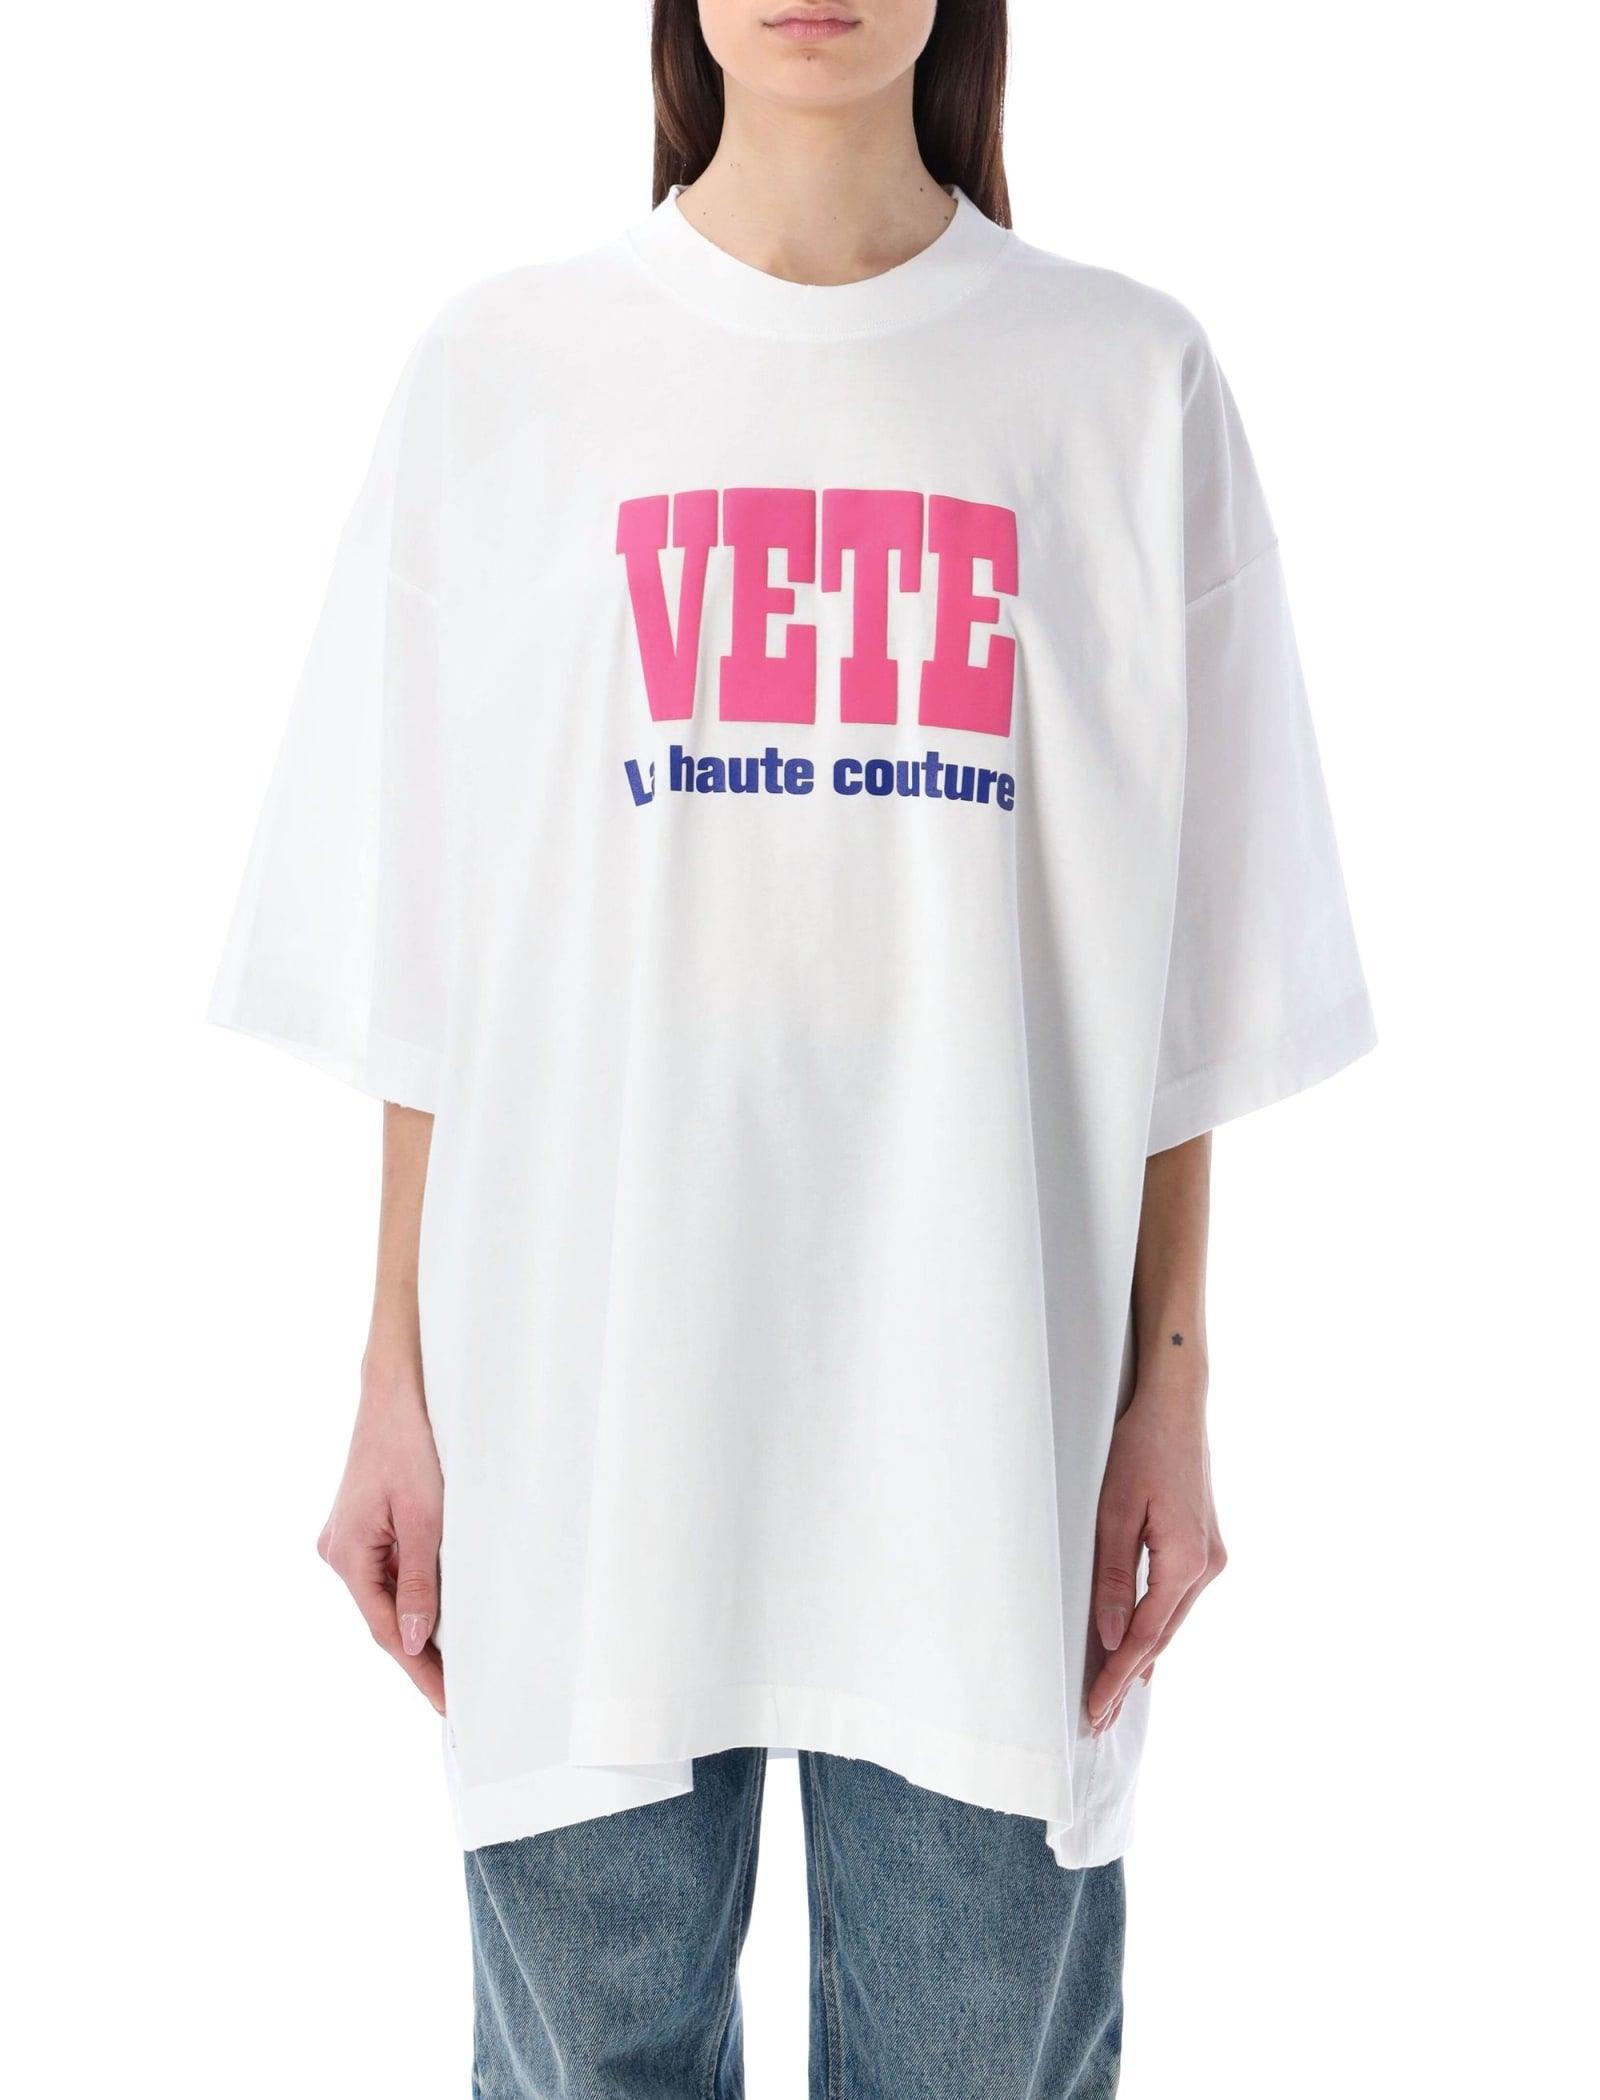 Vetements La Haute Couture T-shirt in White | Lyst